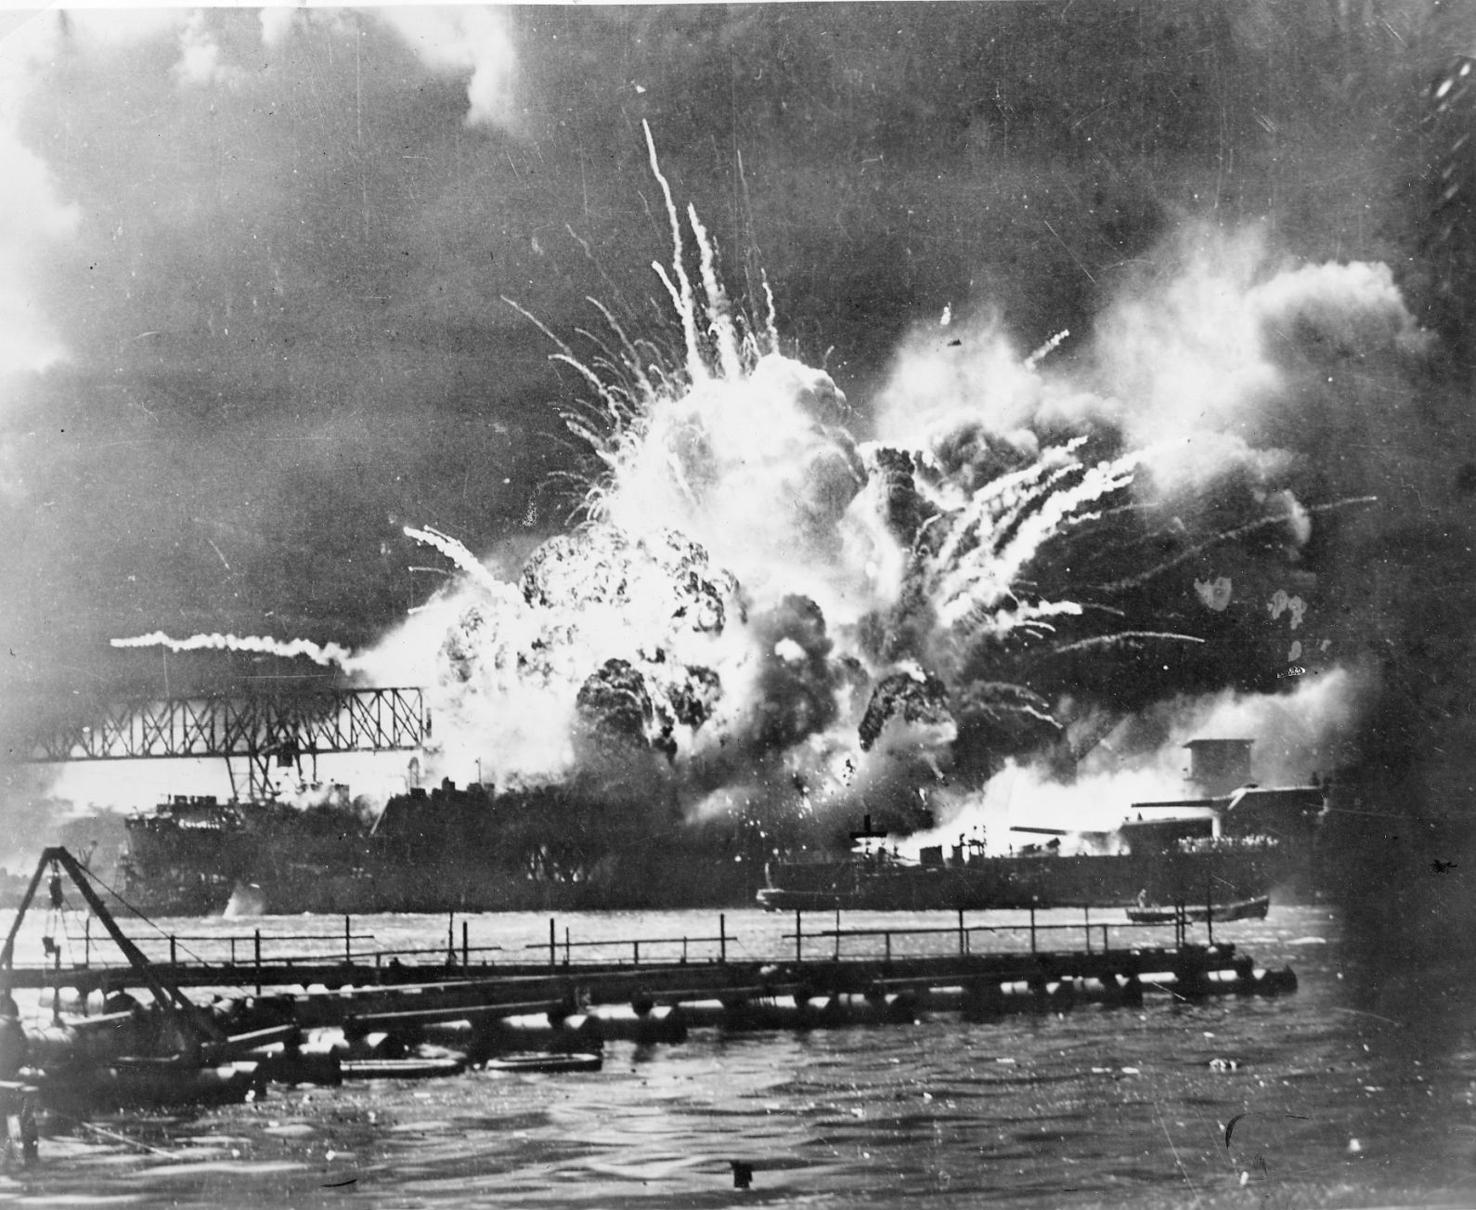 PHOTOS Attack on Pearl Harbor, Dec. 7, 1941